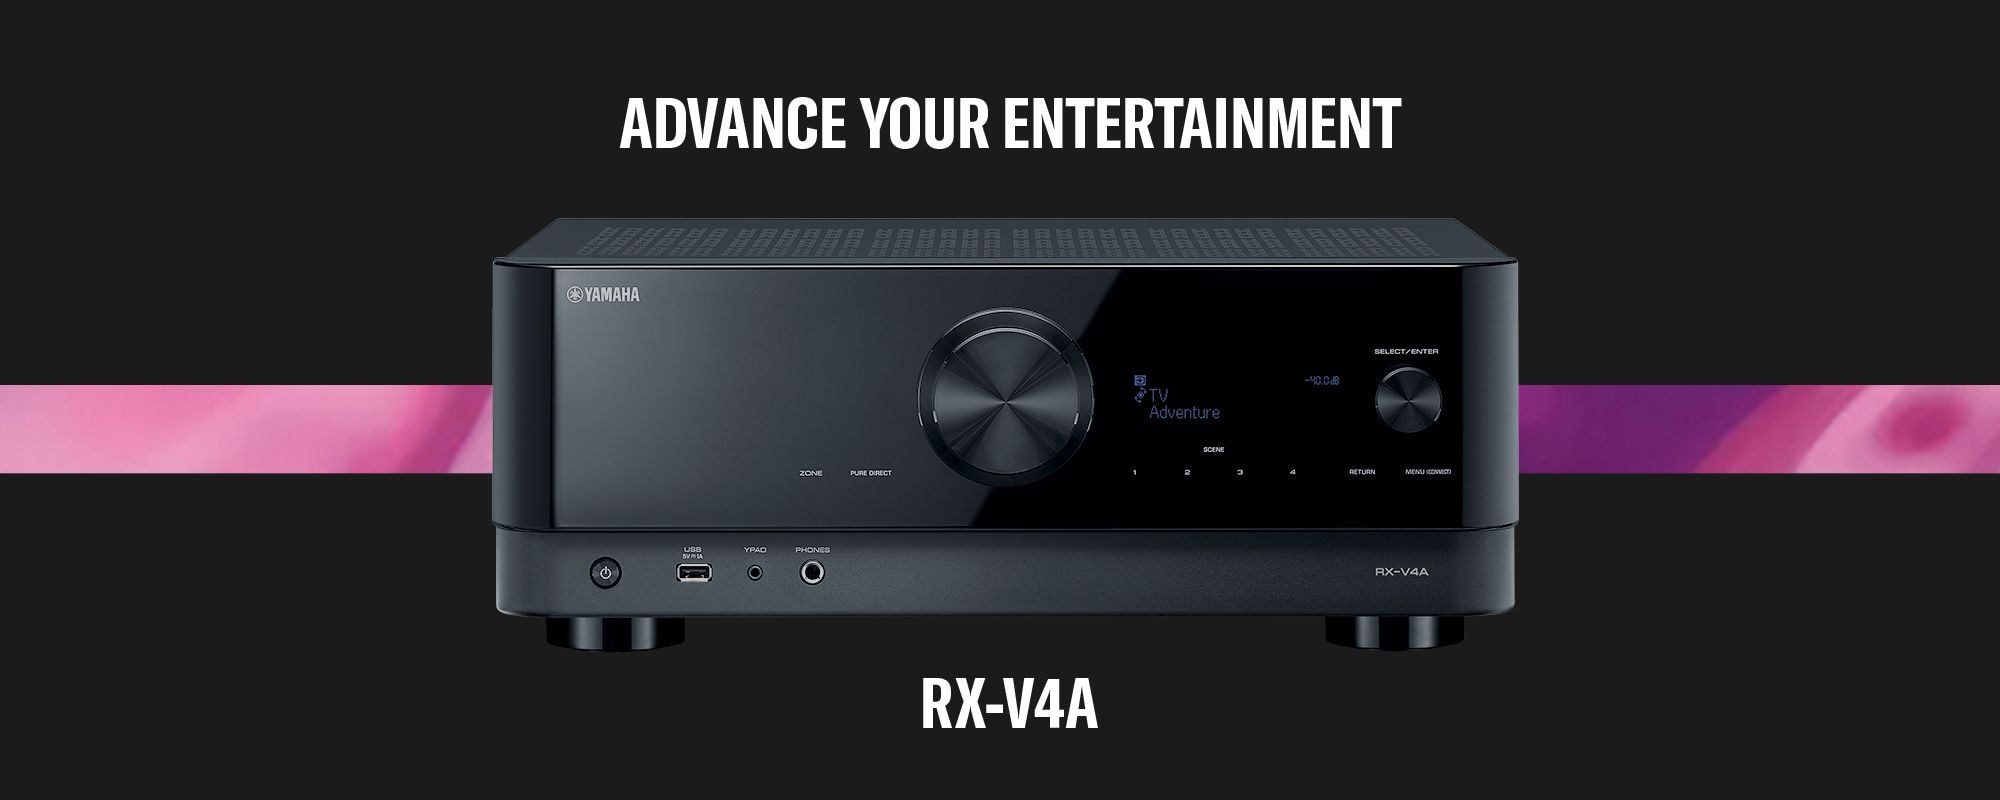 RX-V4A 5.1 channel 4K HDMI USA Yamaha – Receiver AV / 8K